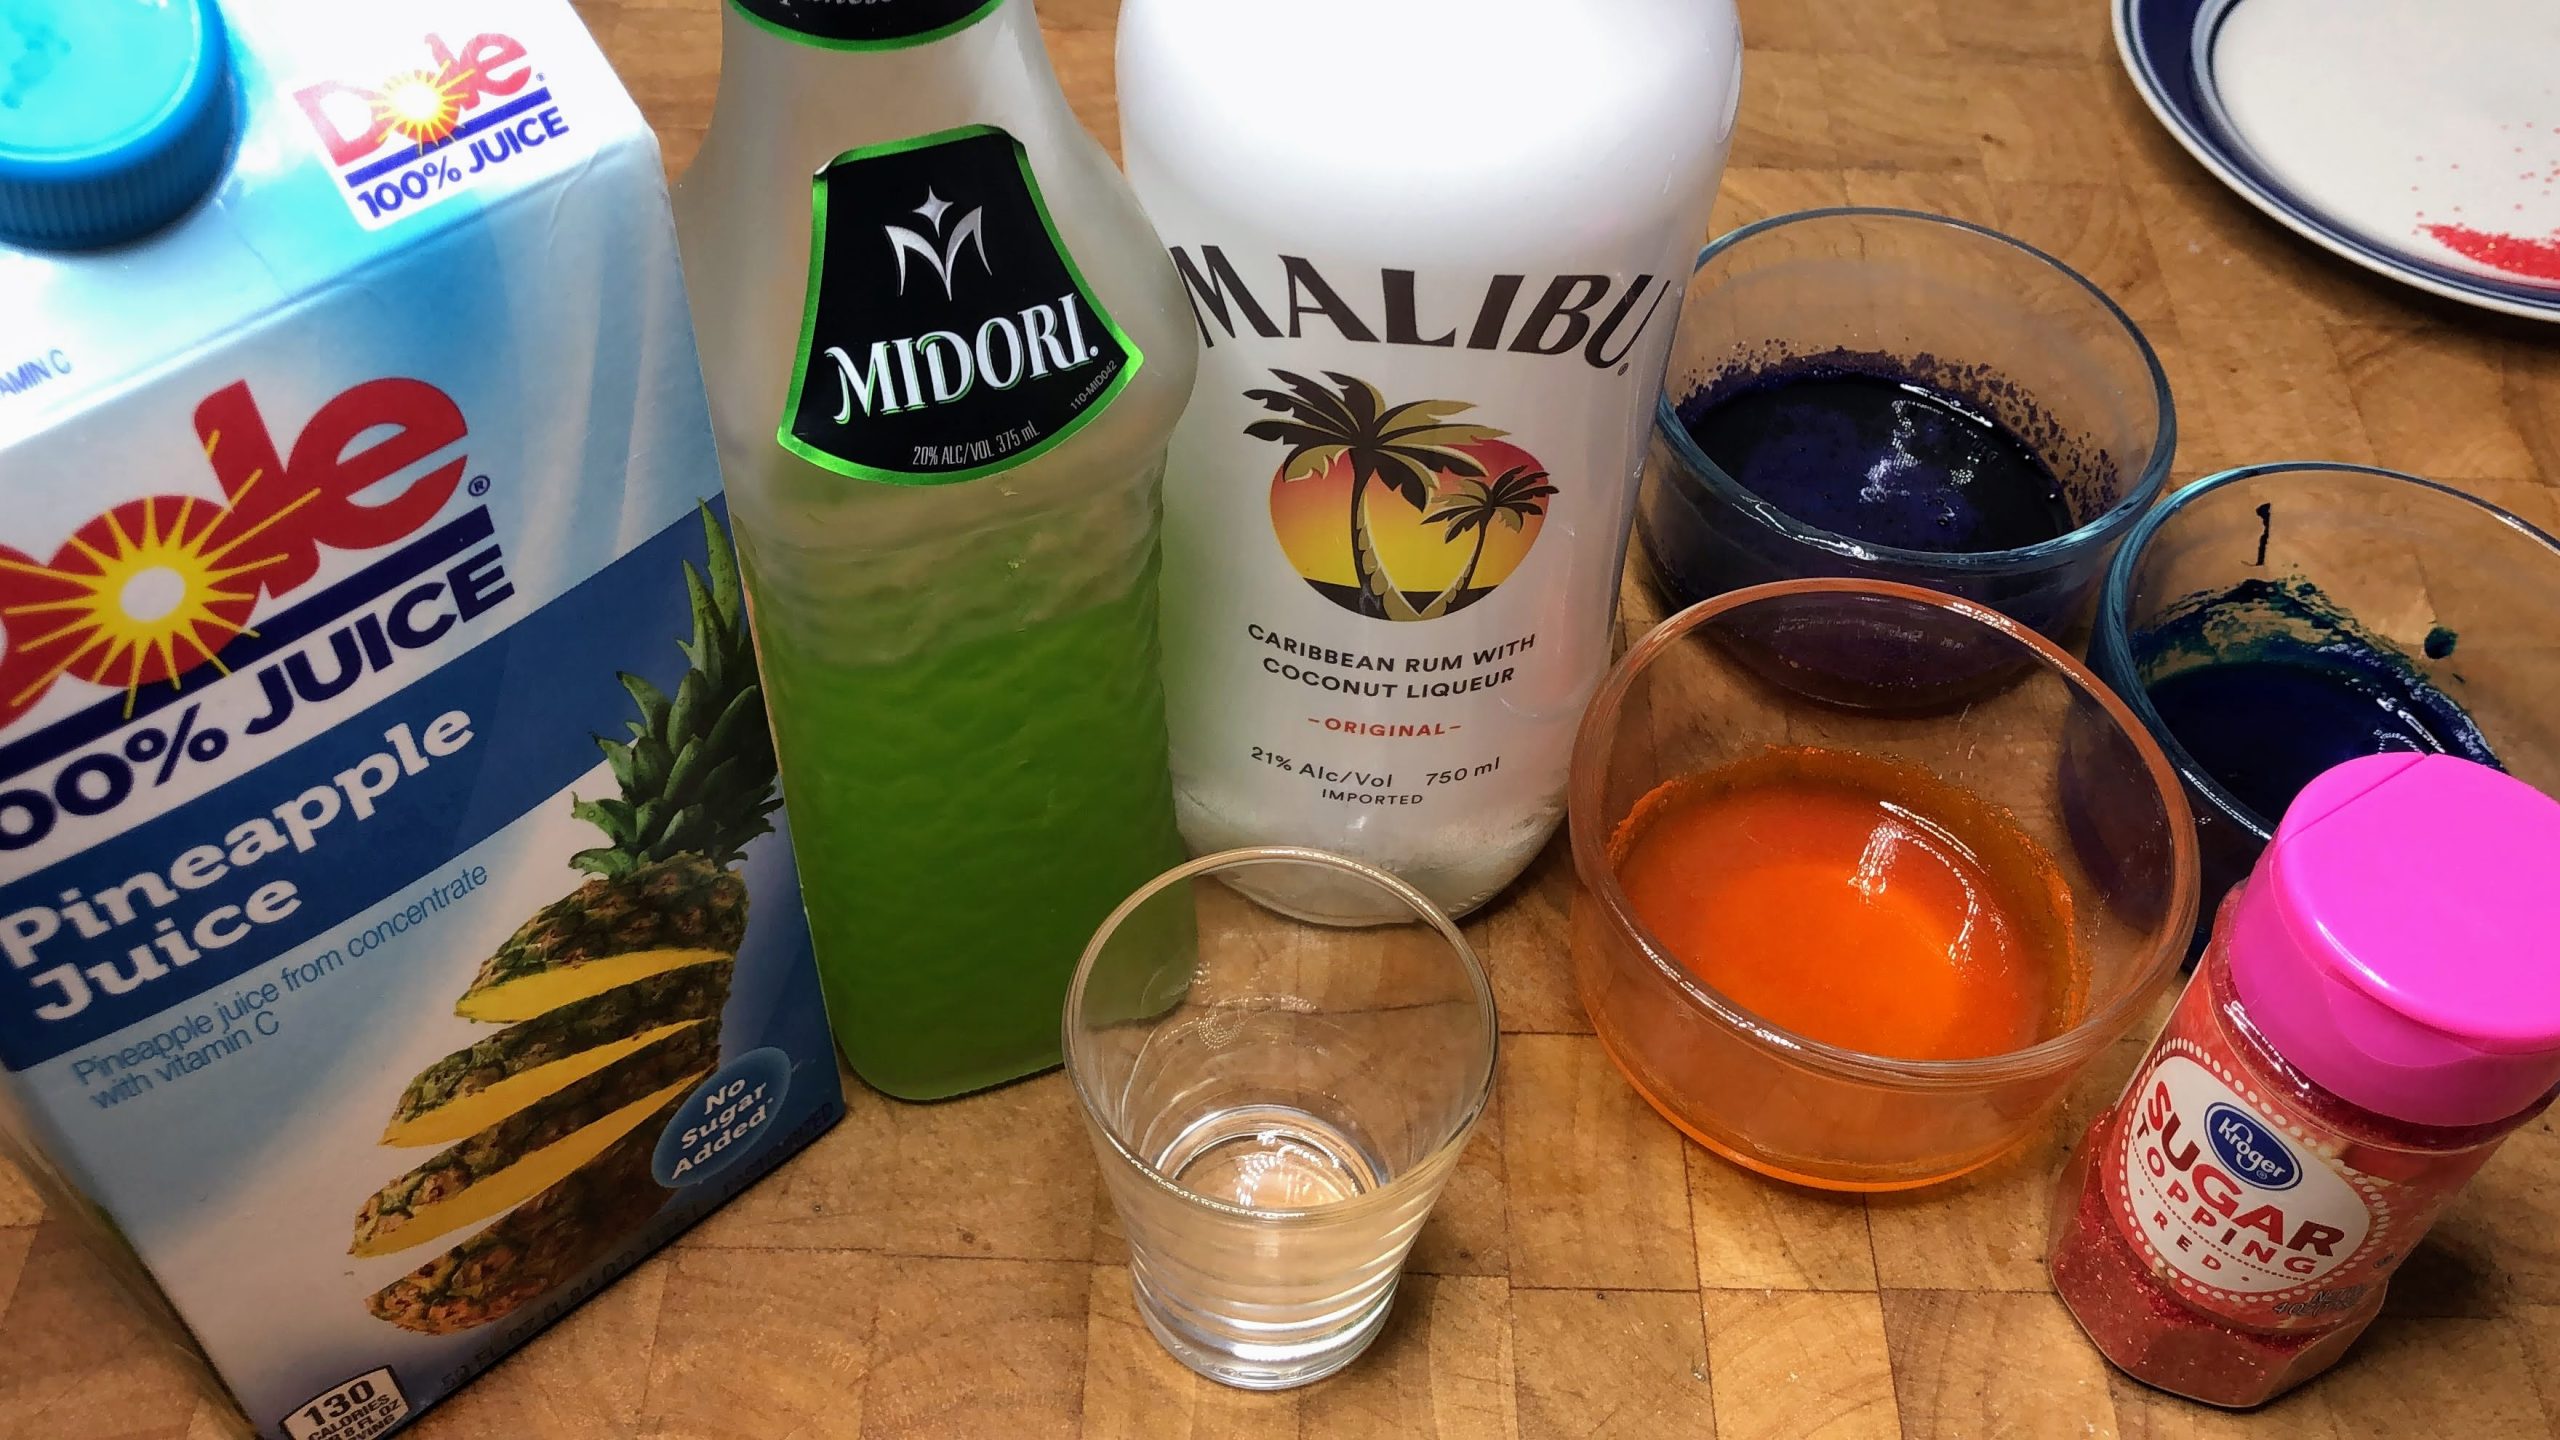 shot glass next to red sugar, orange sugar, purple sugar, blue sugar and bottles of malibu, midori and pineapple juice